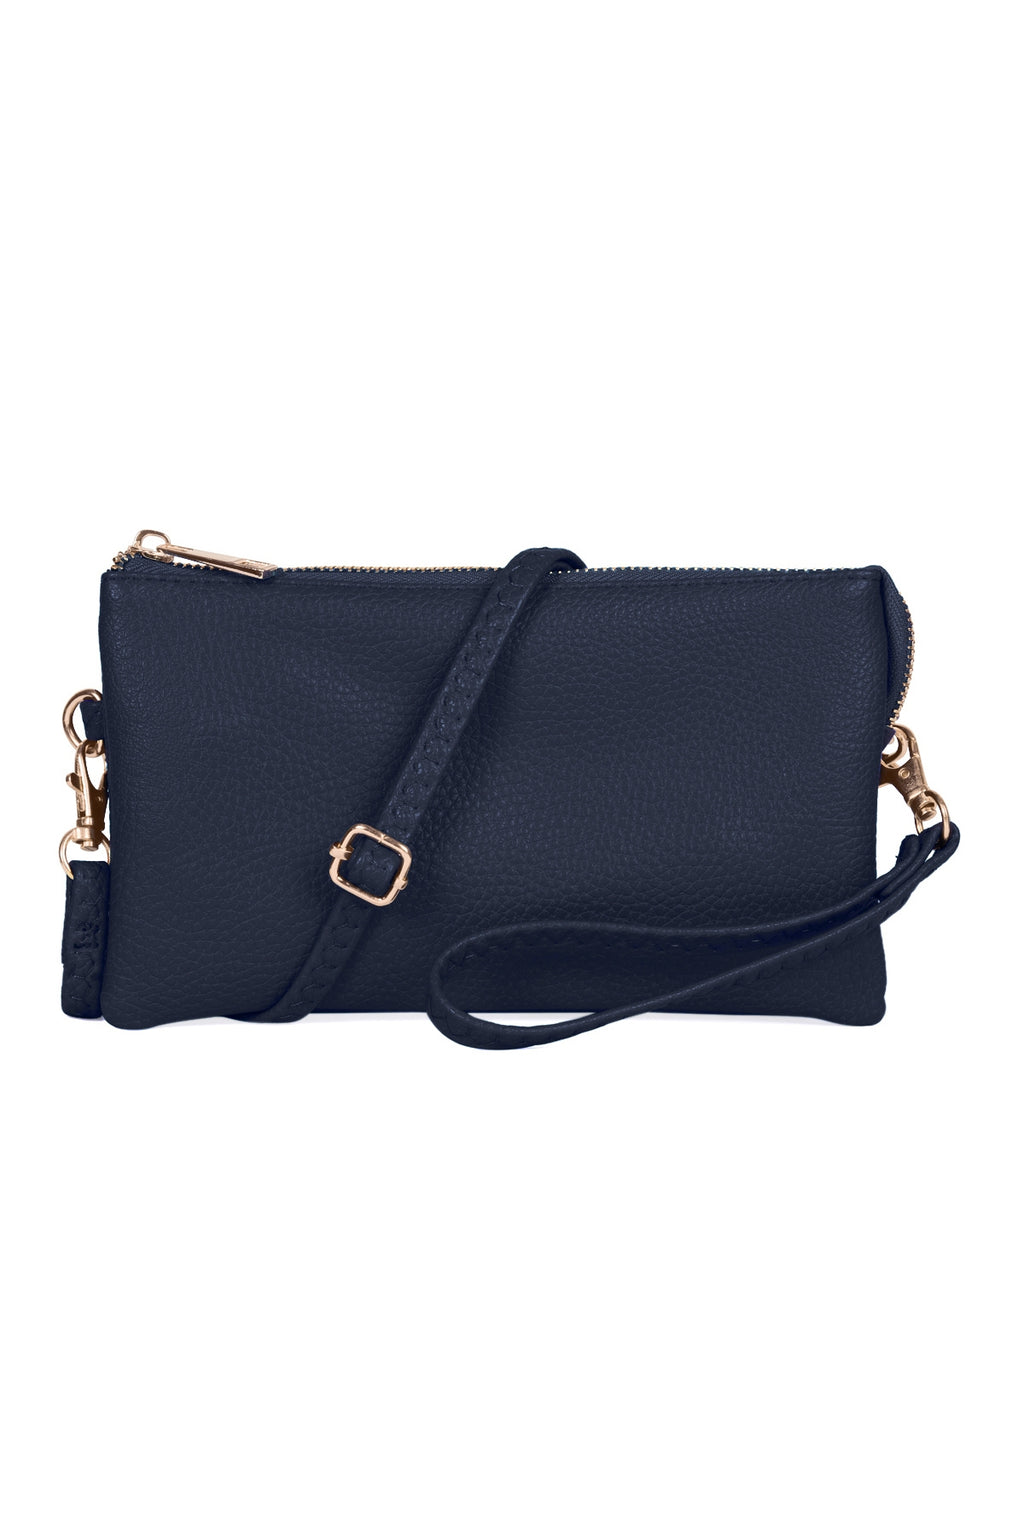 Buy Wholesale Fashion Handbags in Bulk - Apparel Candy